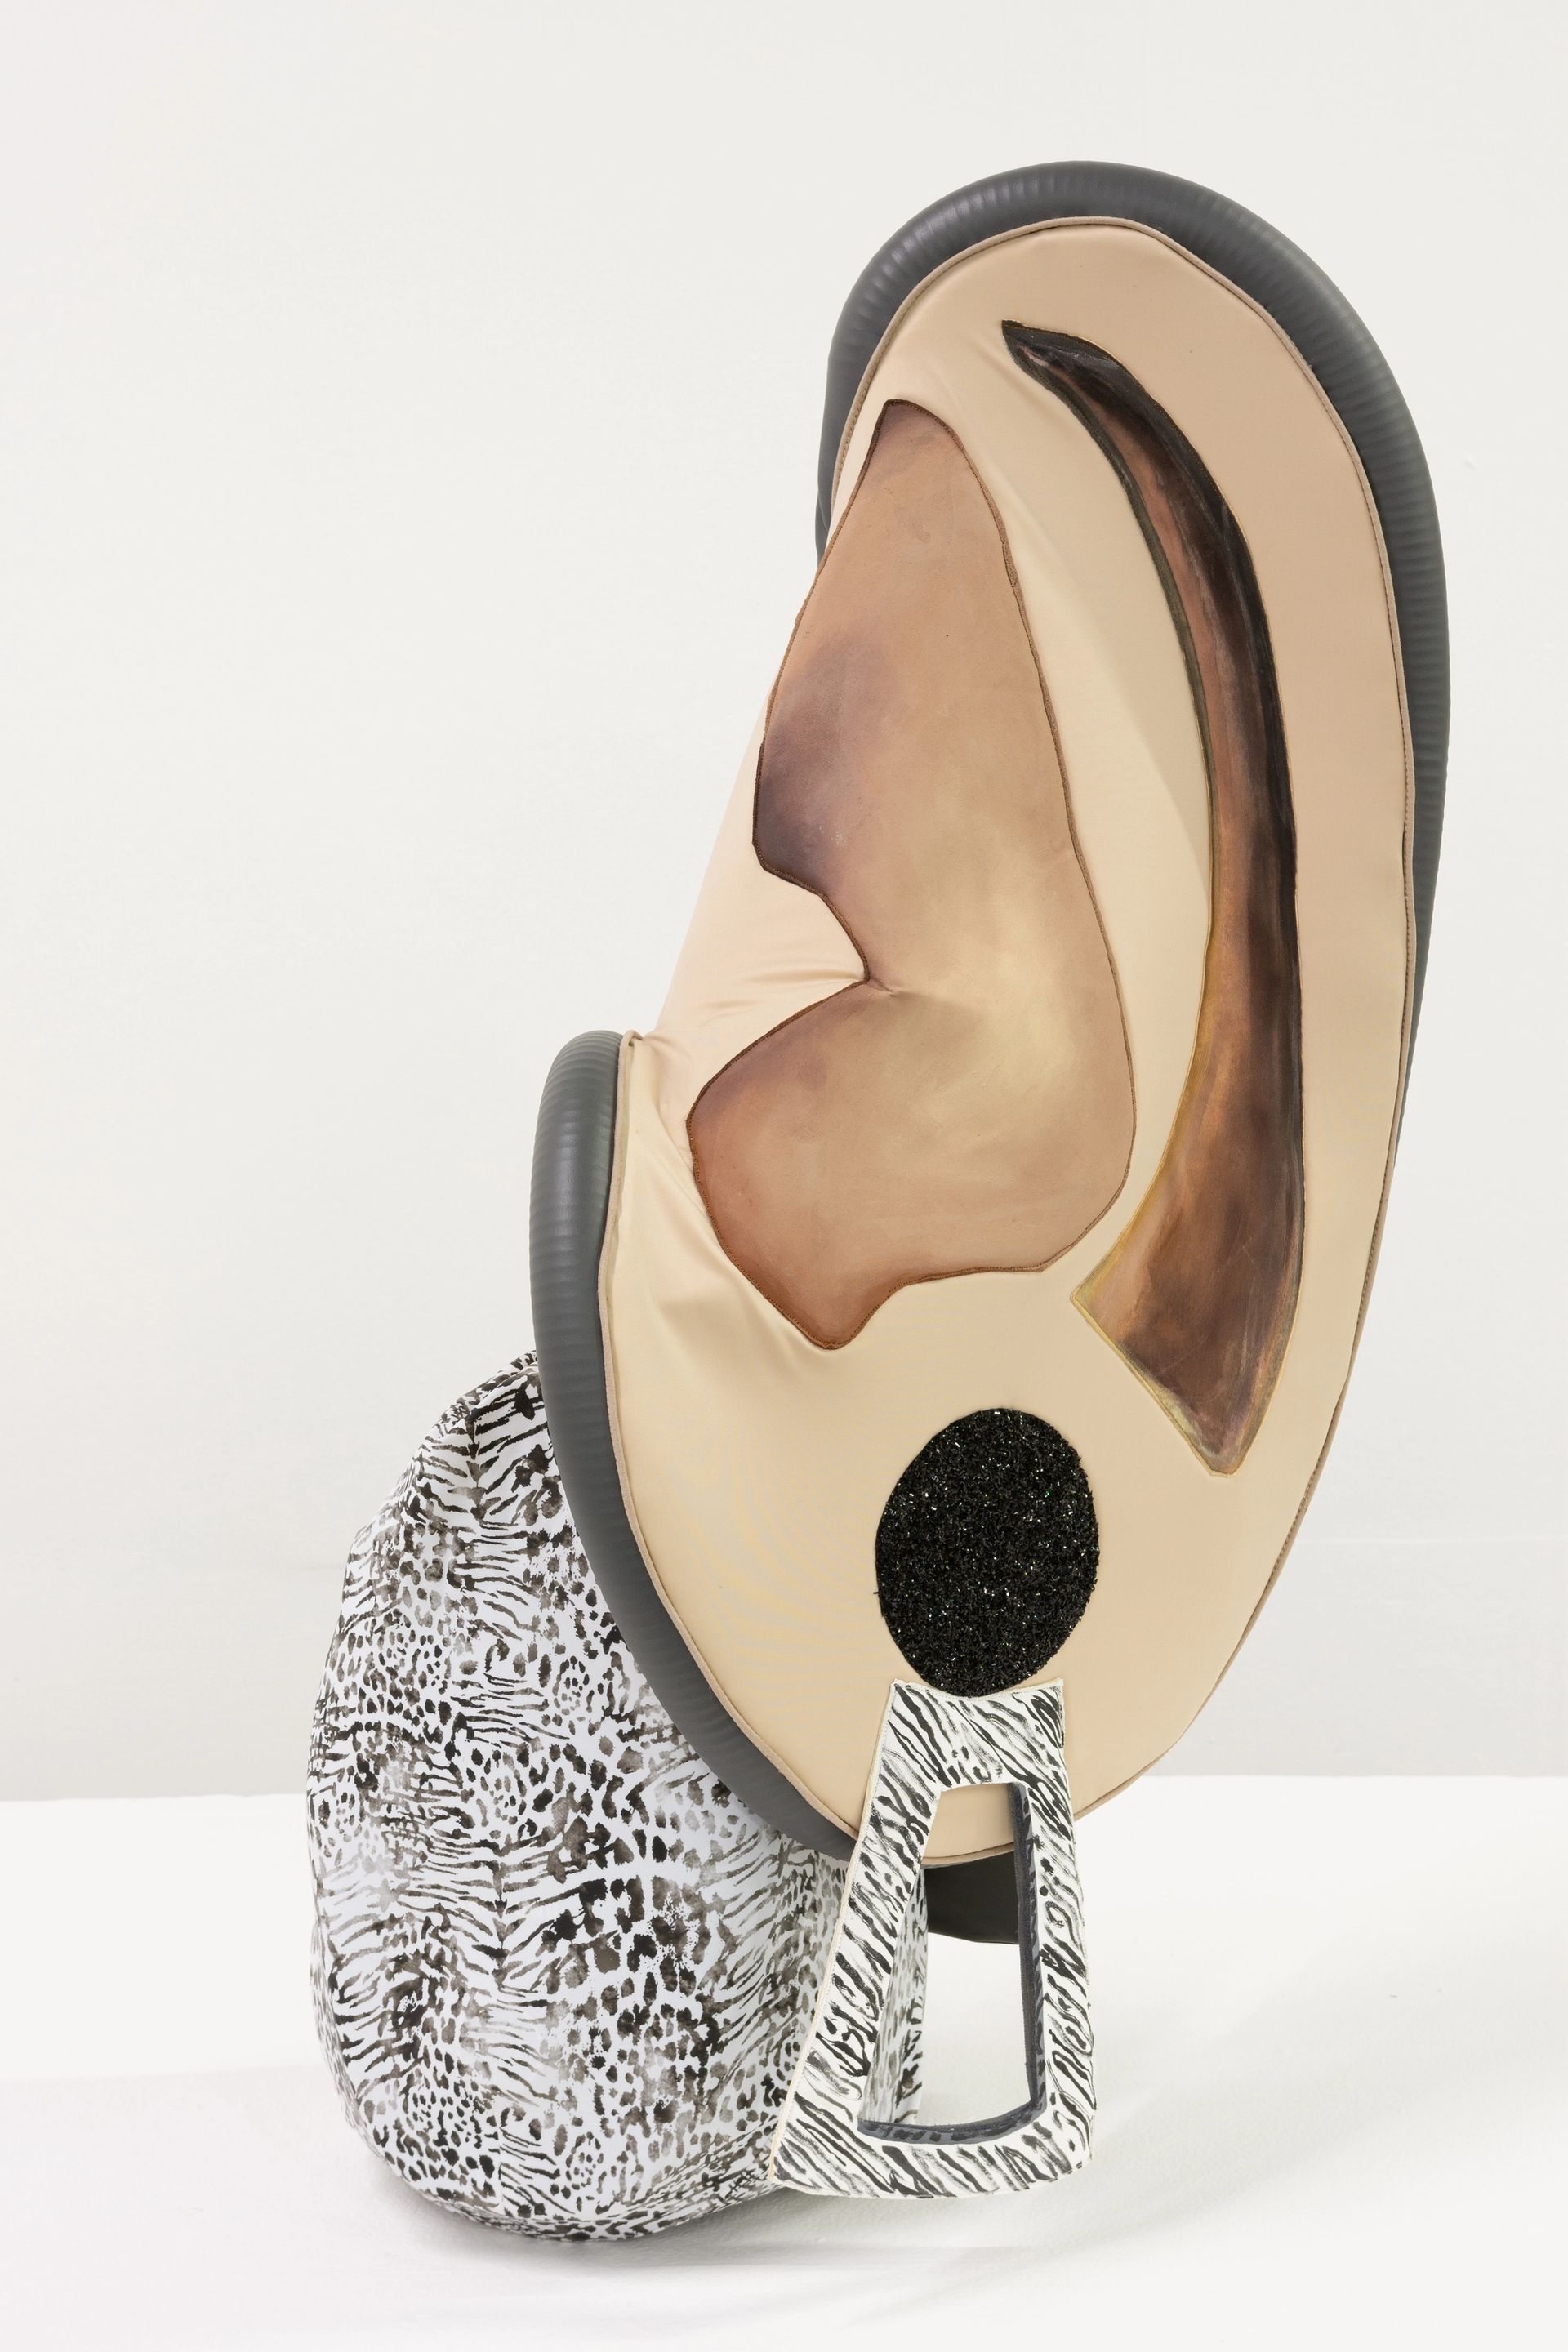 Ana Navas, Ear III, 2019, vacuum cleaner, cloth, acrylic, 88 × 40 × 35 cm
